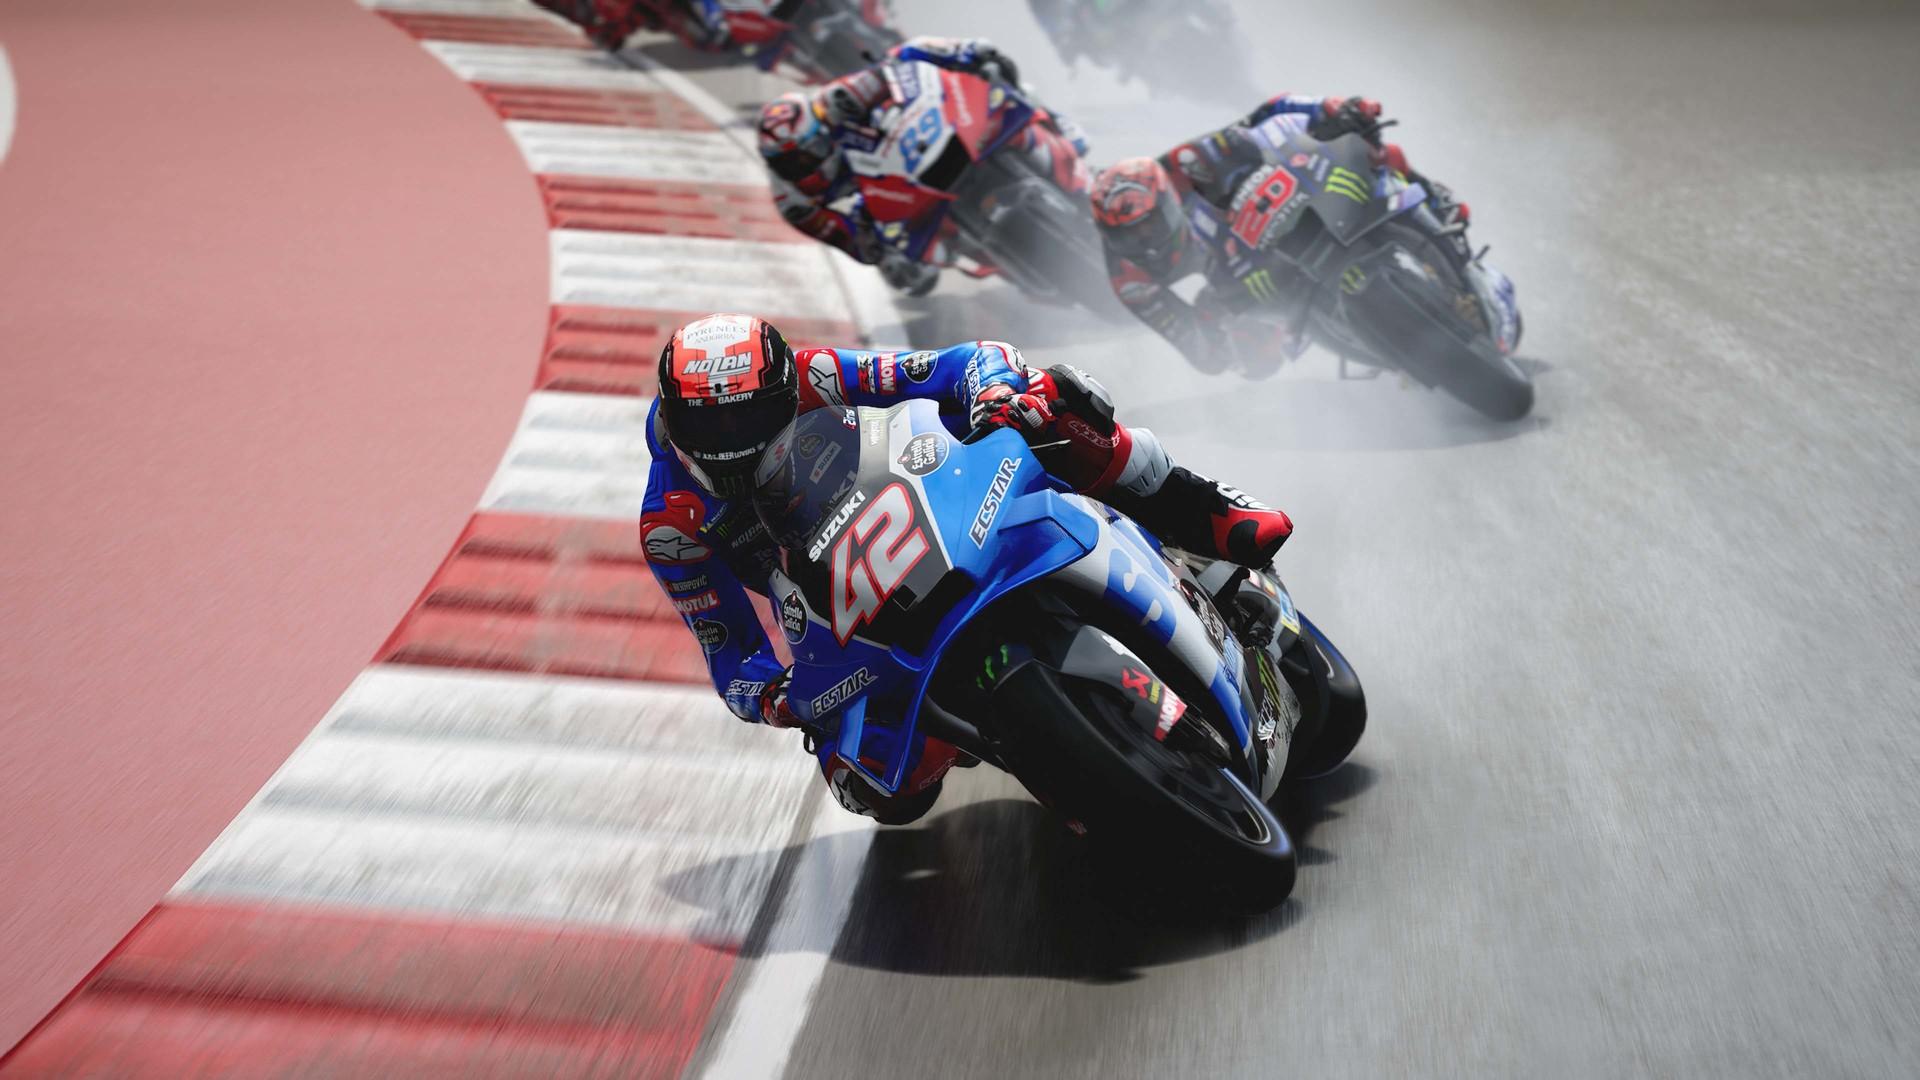 Screenshot №1 from game MotoGP™22